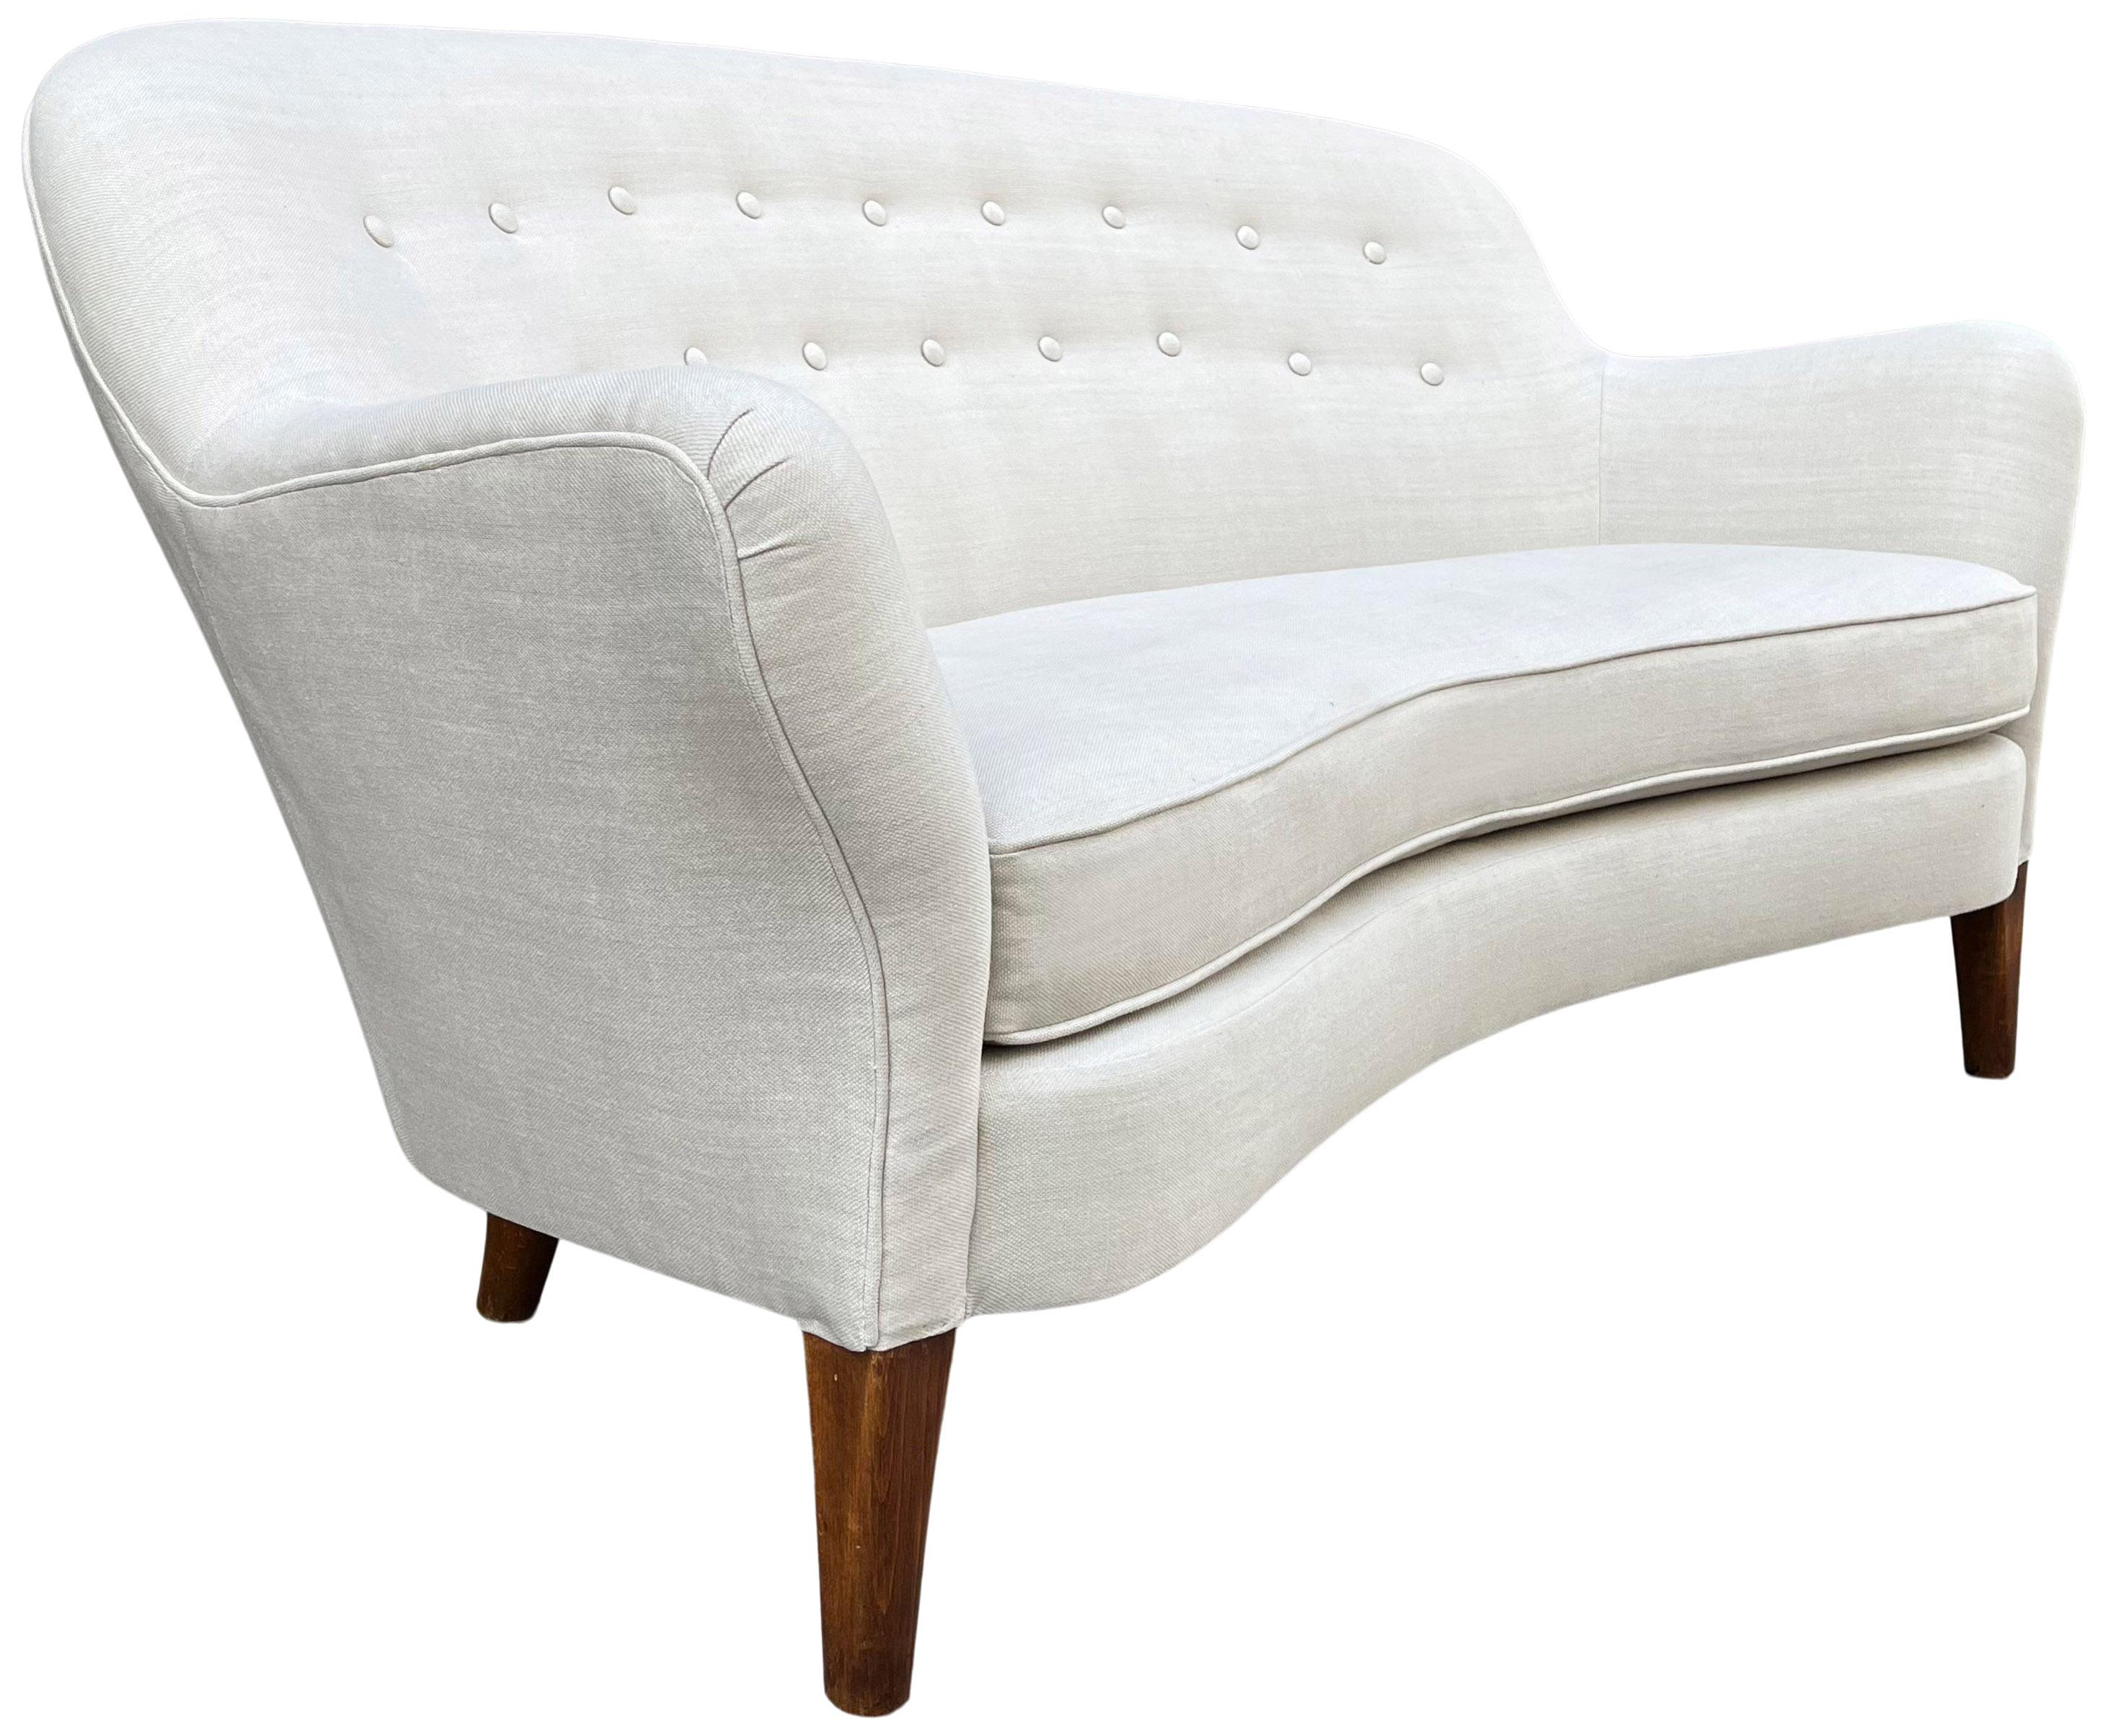 Upholstery Superb Midcentury Curved Sofa or Sette Nanna Ditzel